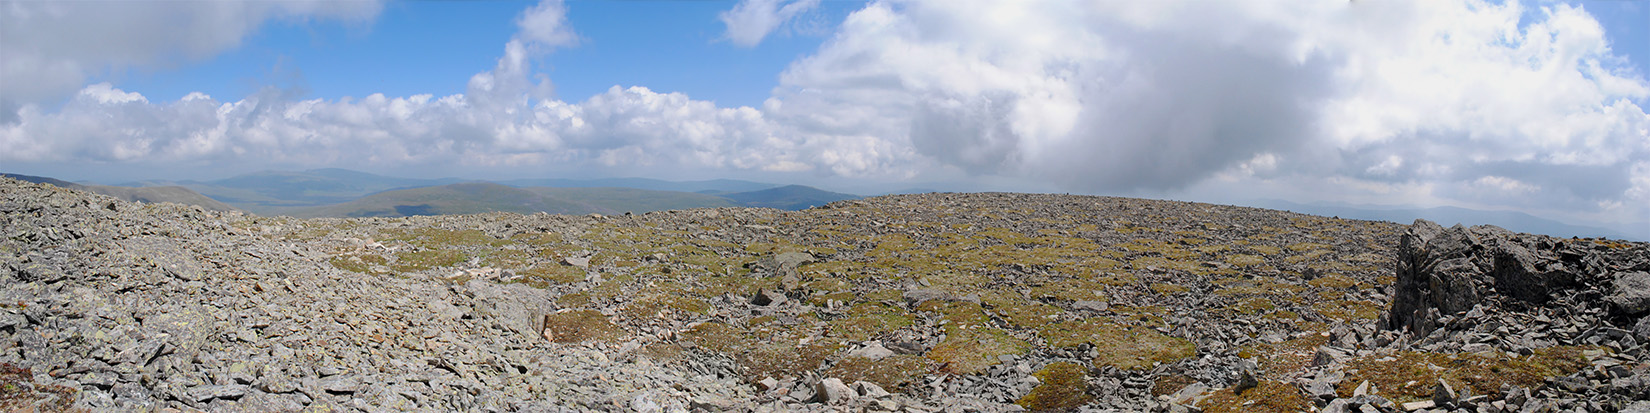 Гора Сарлык, изображение ландшафта.